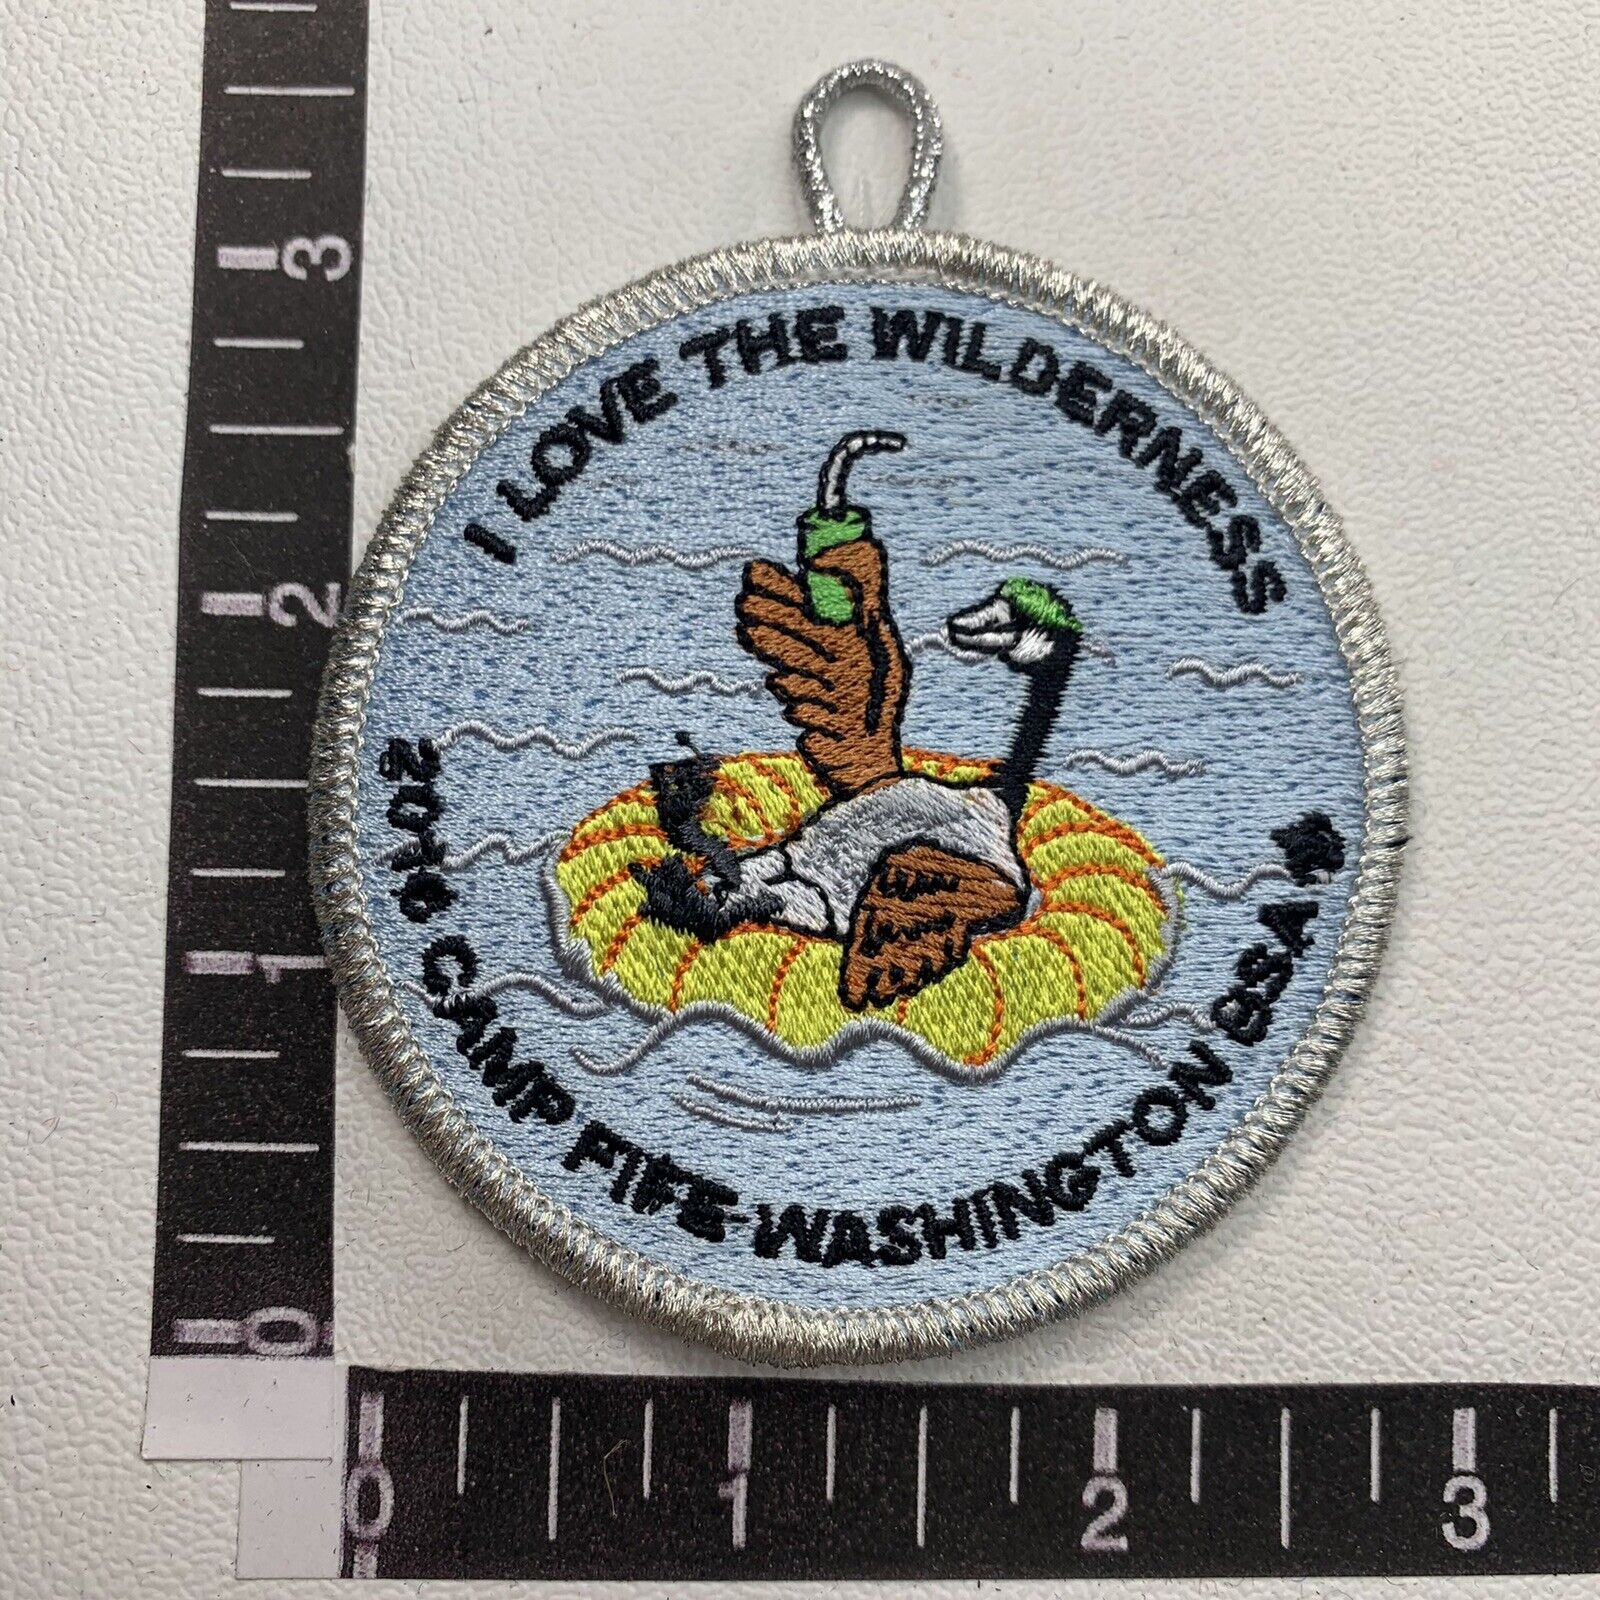 2016 CAMP FIFE WASHINGTON BSA “I Love The Wilderness” Boy Scouts Patch 13T